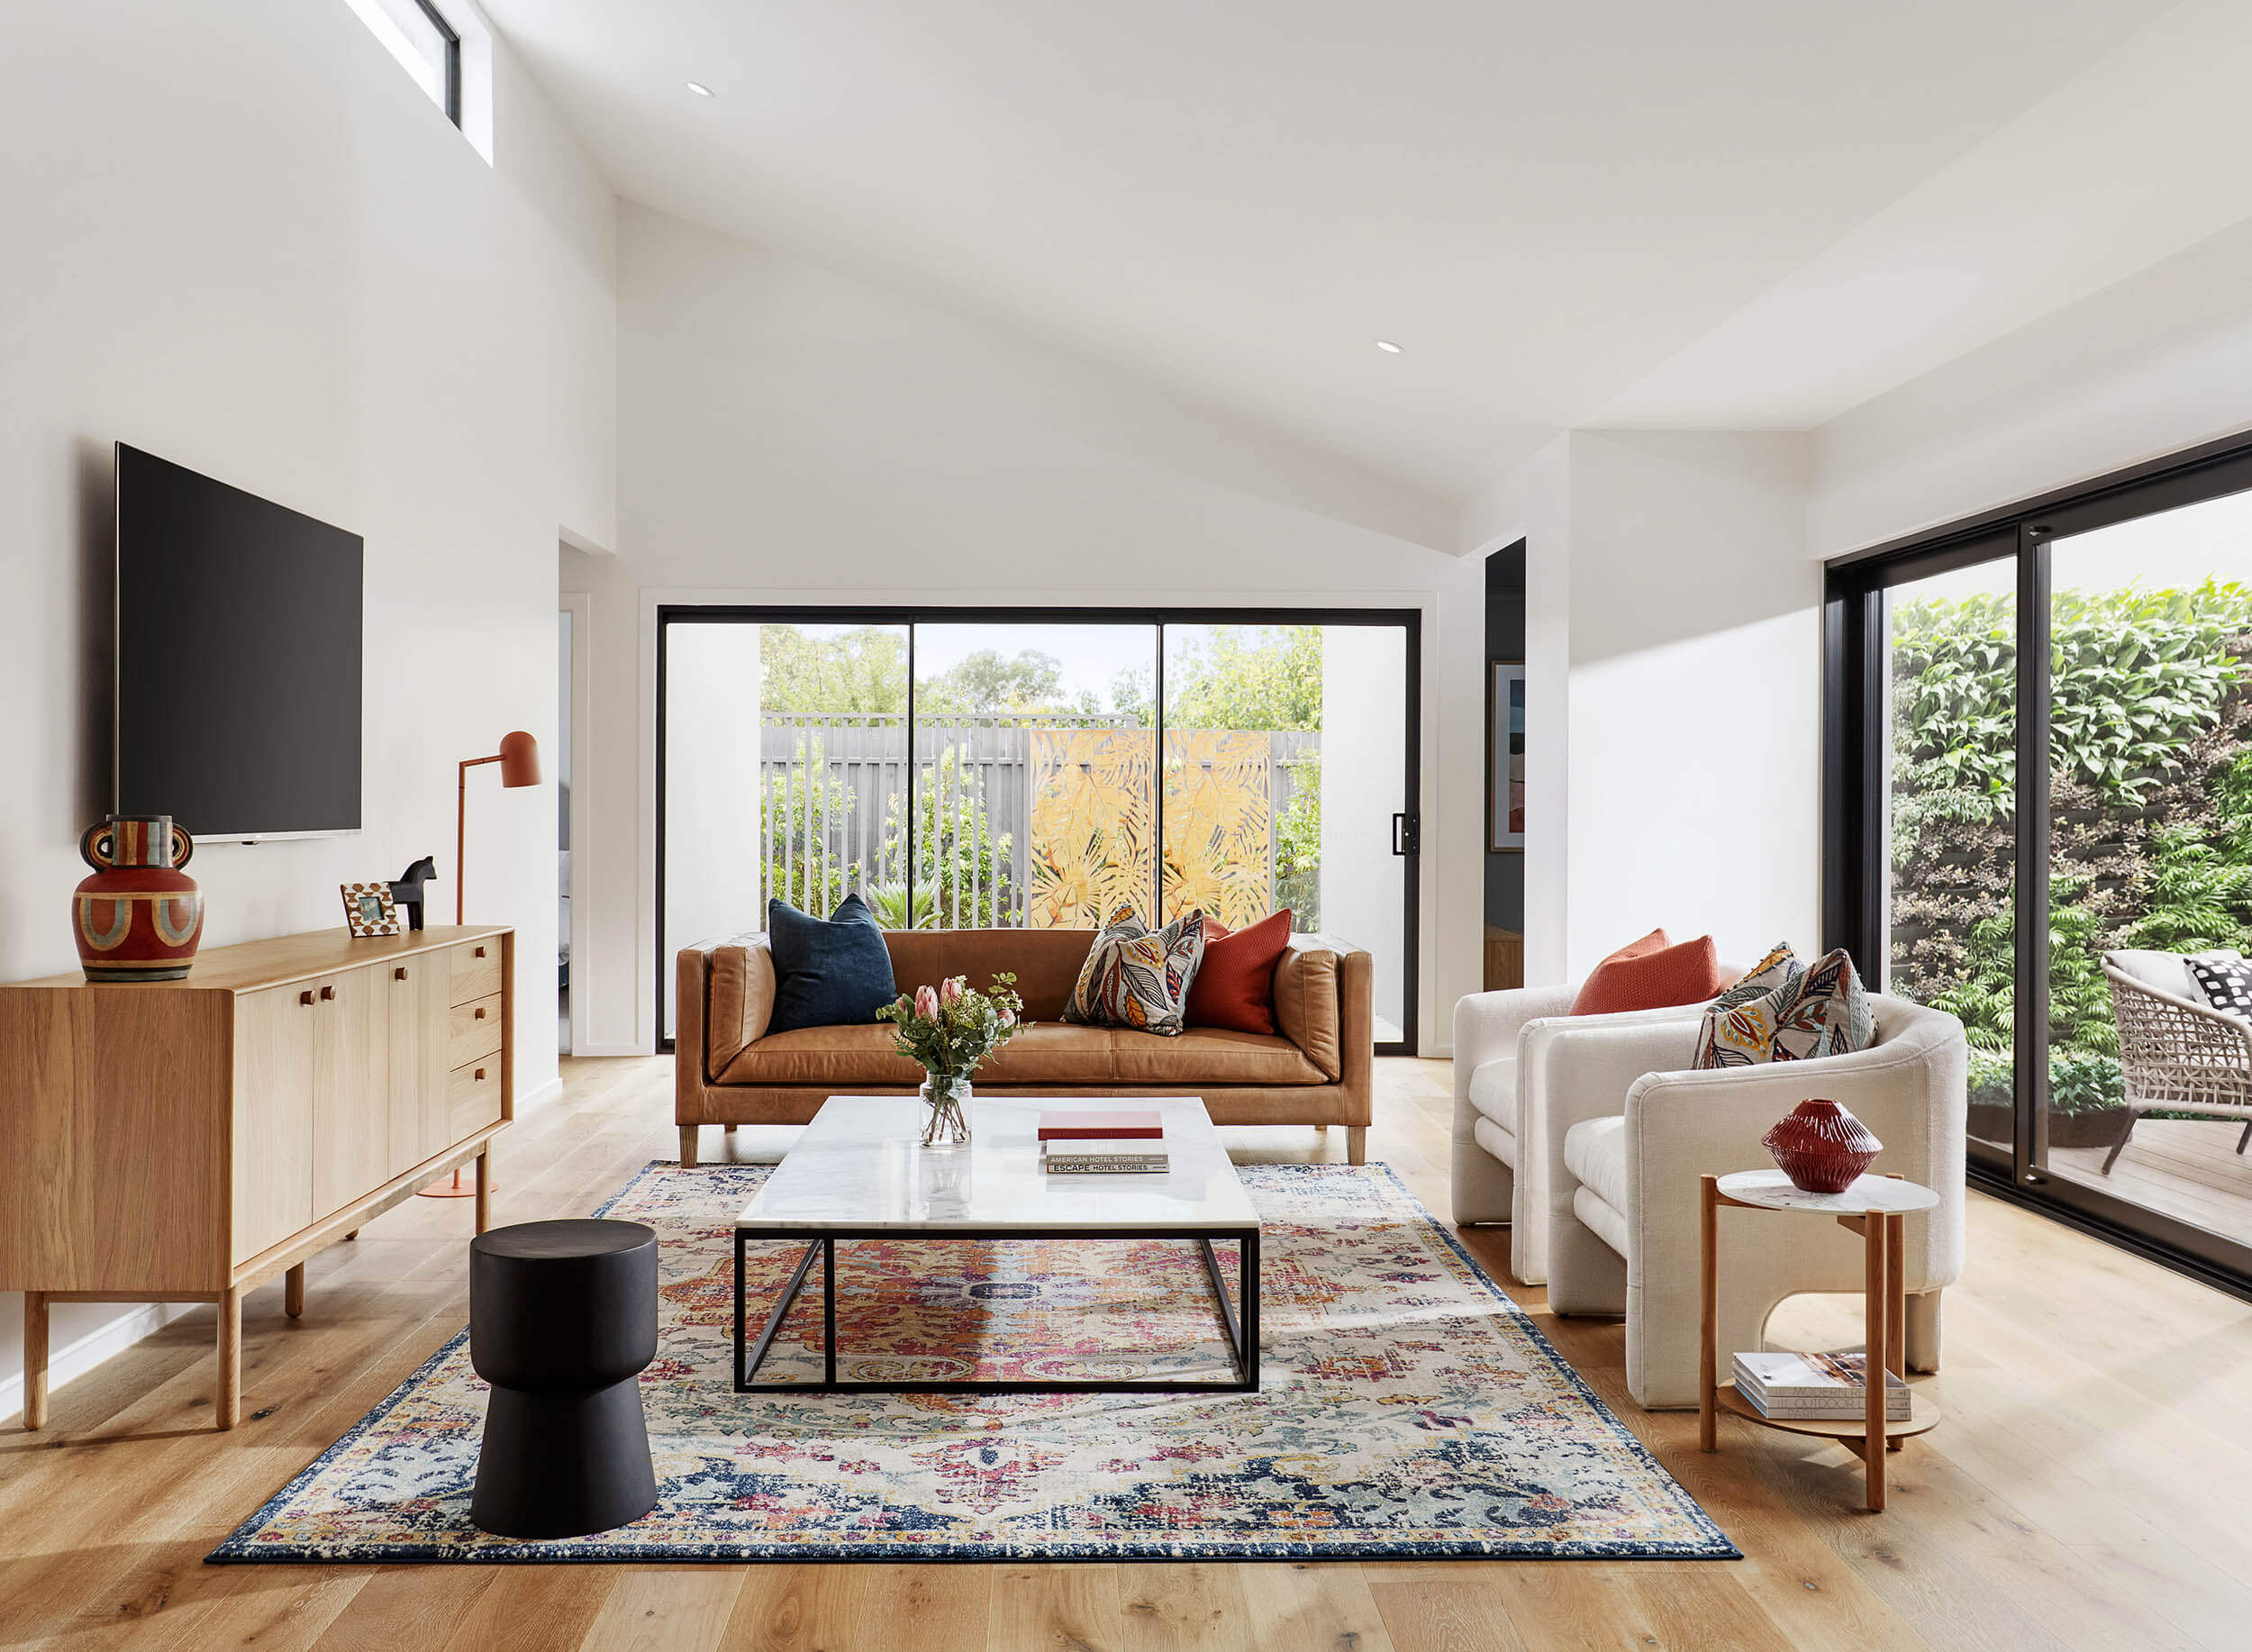 Banyan 4 bedroom home design - living room